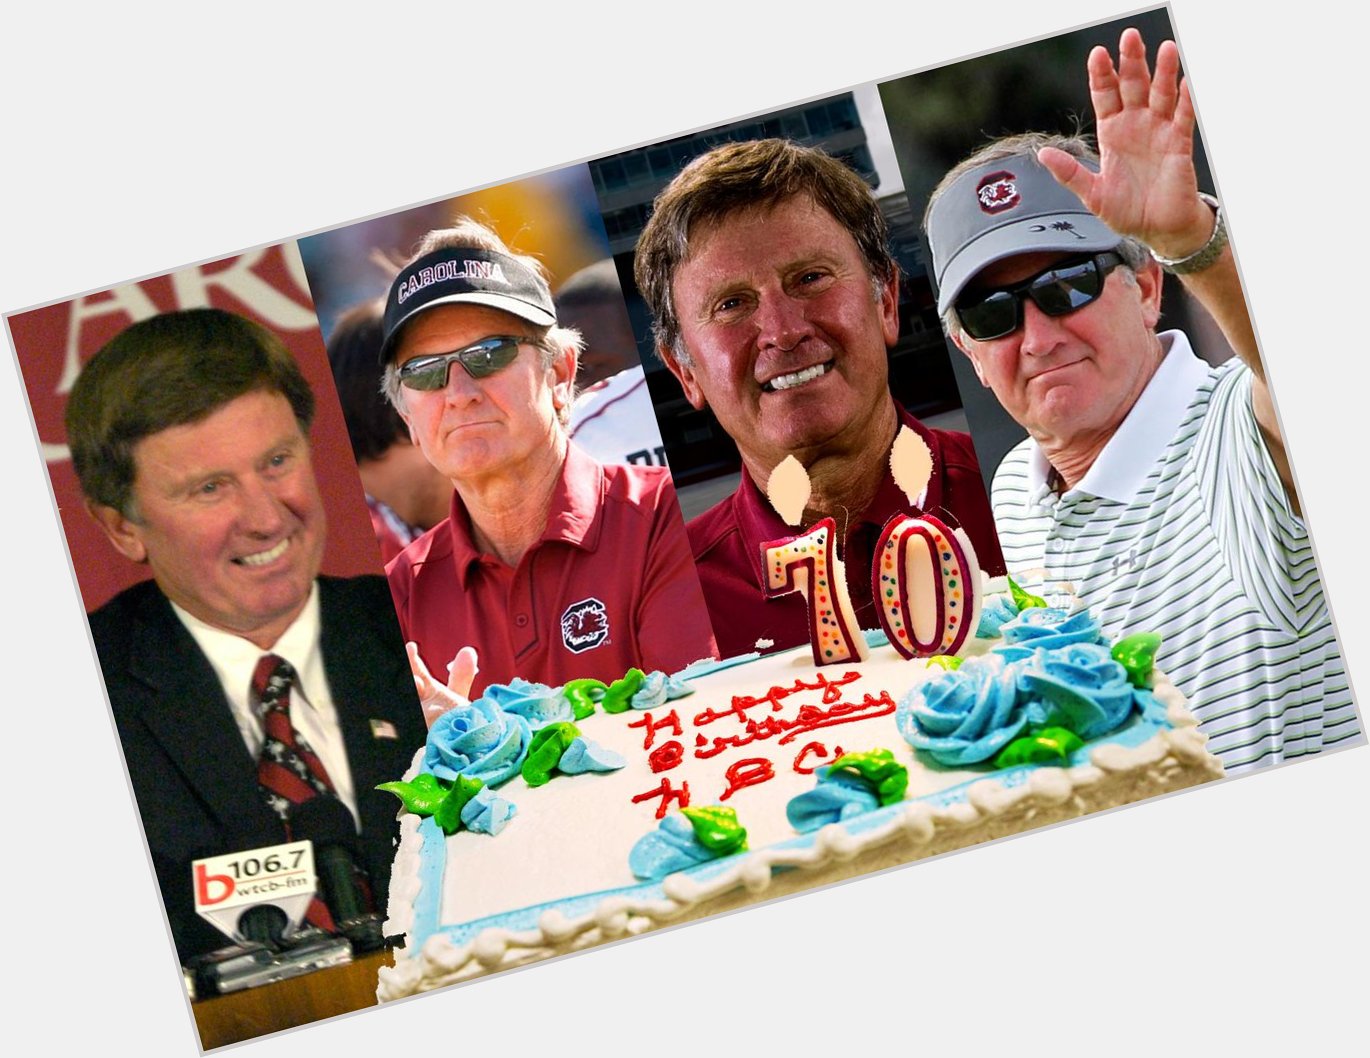 Happy 7 0 th Birthday Coach Steve Spurrier a.k.a.      